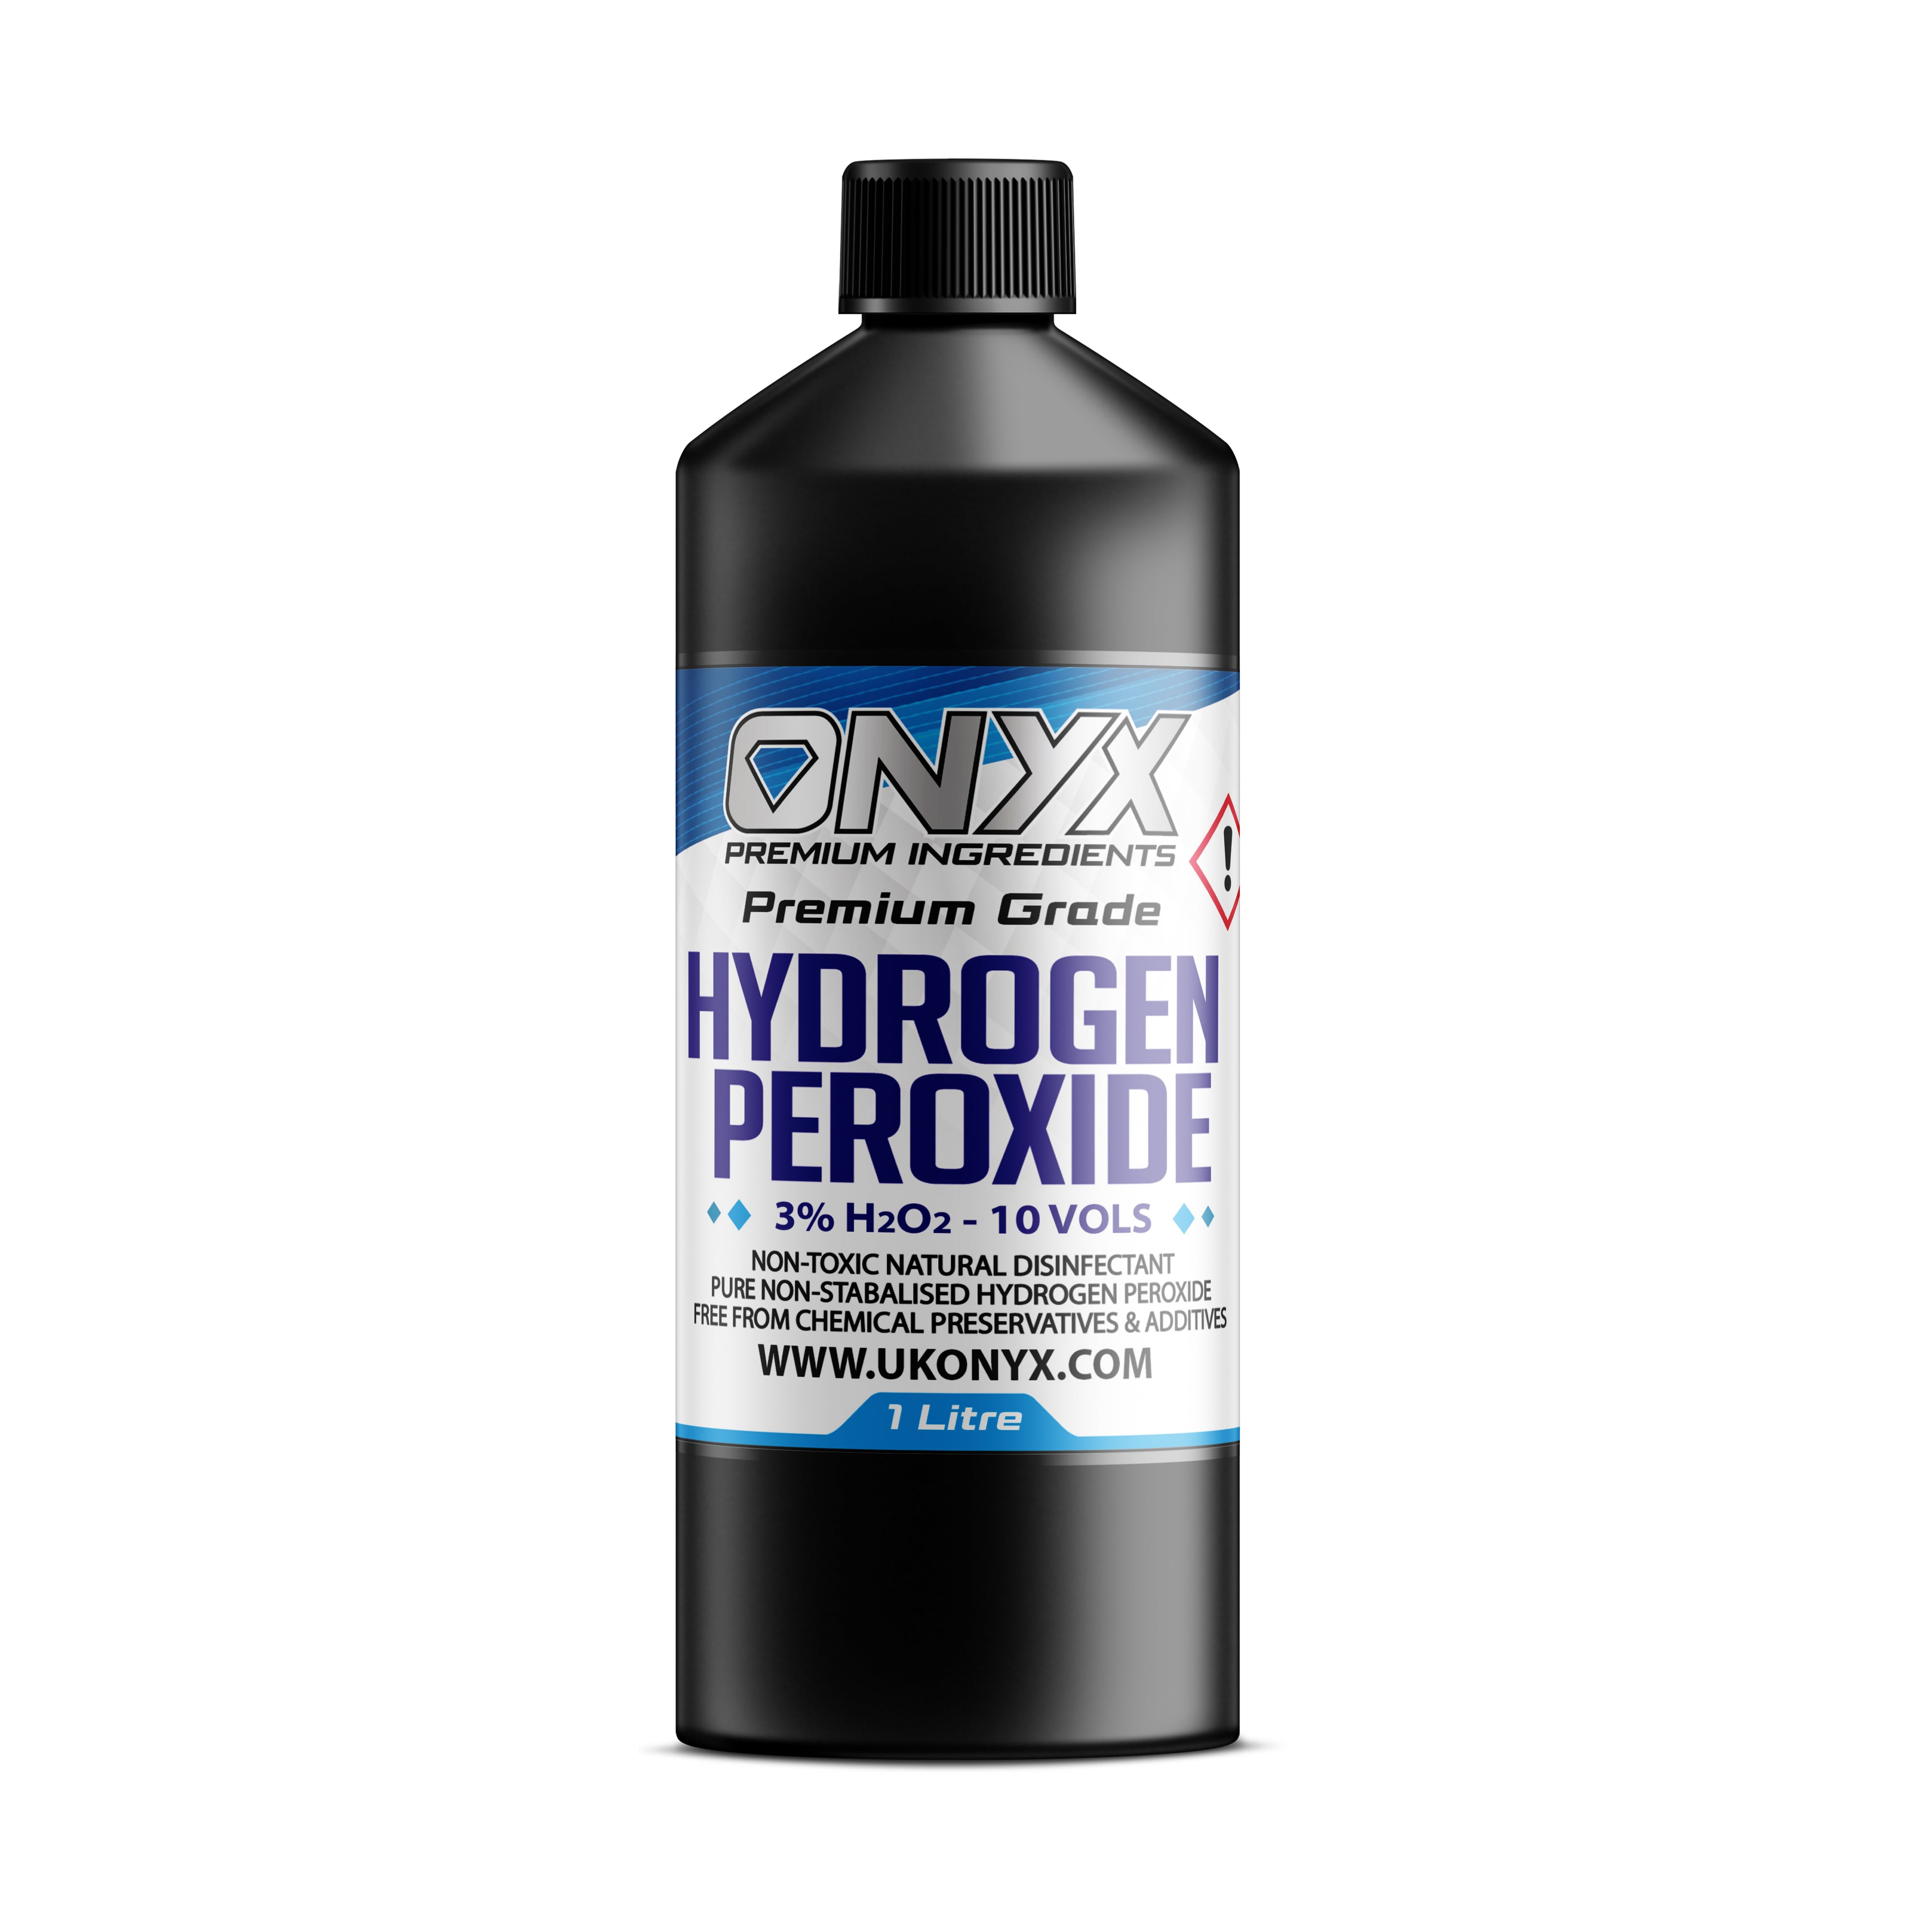 Onyx Hydrogen Peroxide Pure Food Grade 3% 10 Vols Non-Toxic Natural Disinfectant Cleaner 1 Litre.